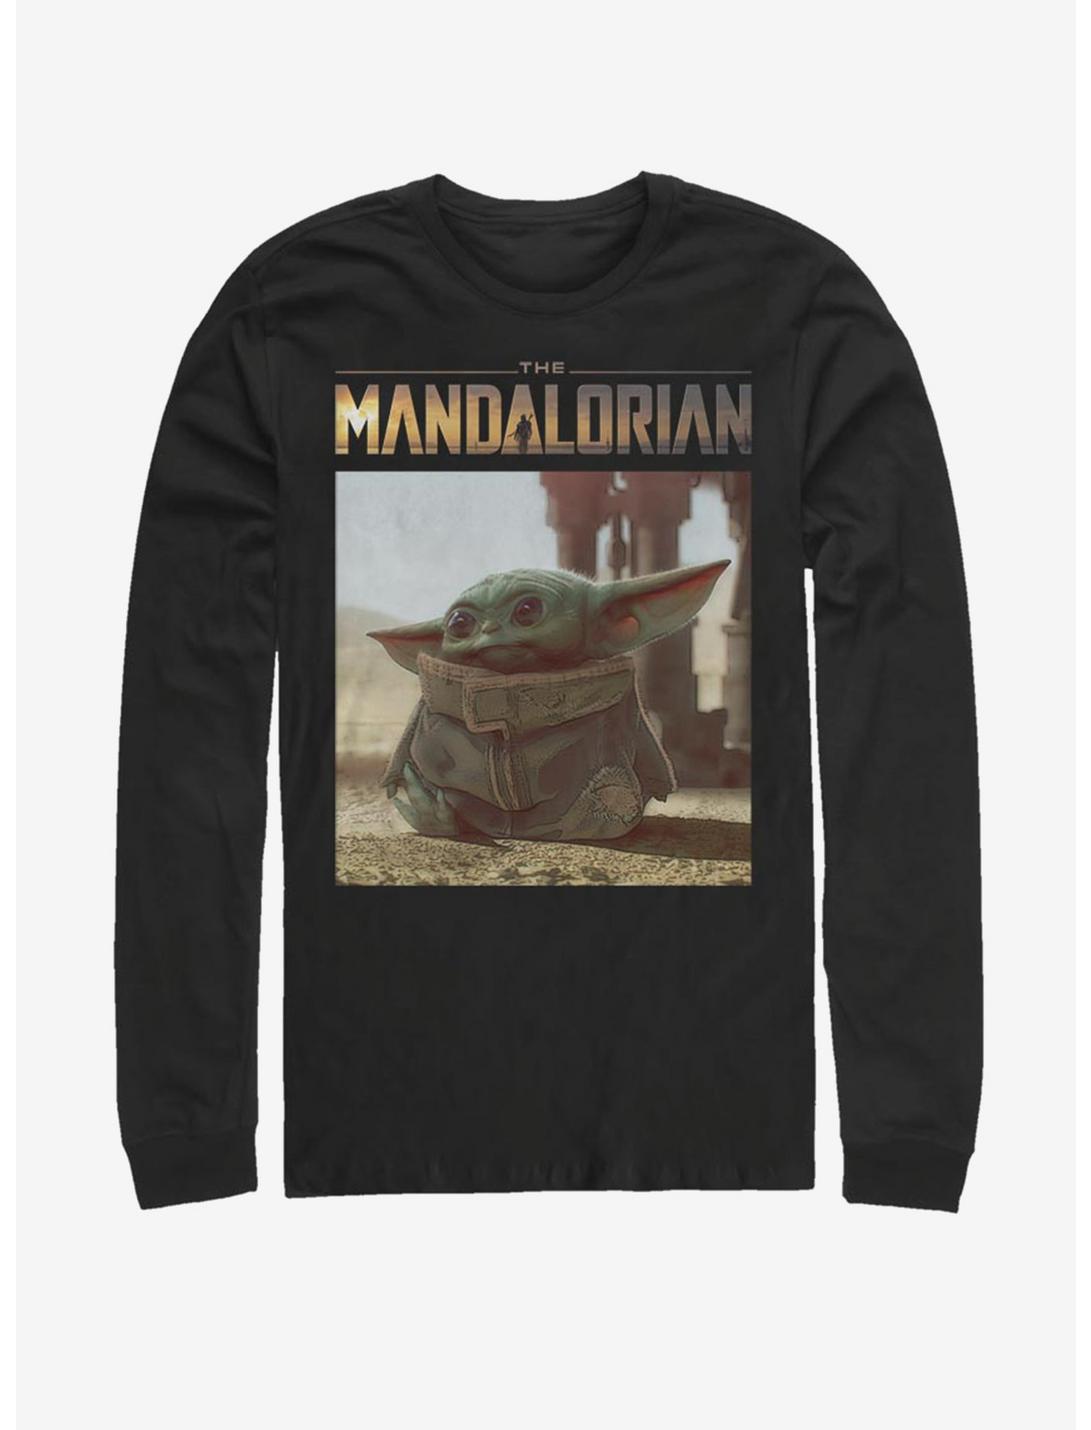 Plus Size Star Wars The Mandalorian The Child All Smiles Long-Sleeve T-Shirt, BLACK, hi-res